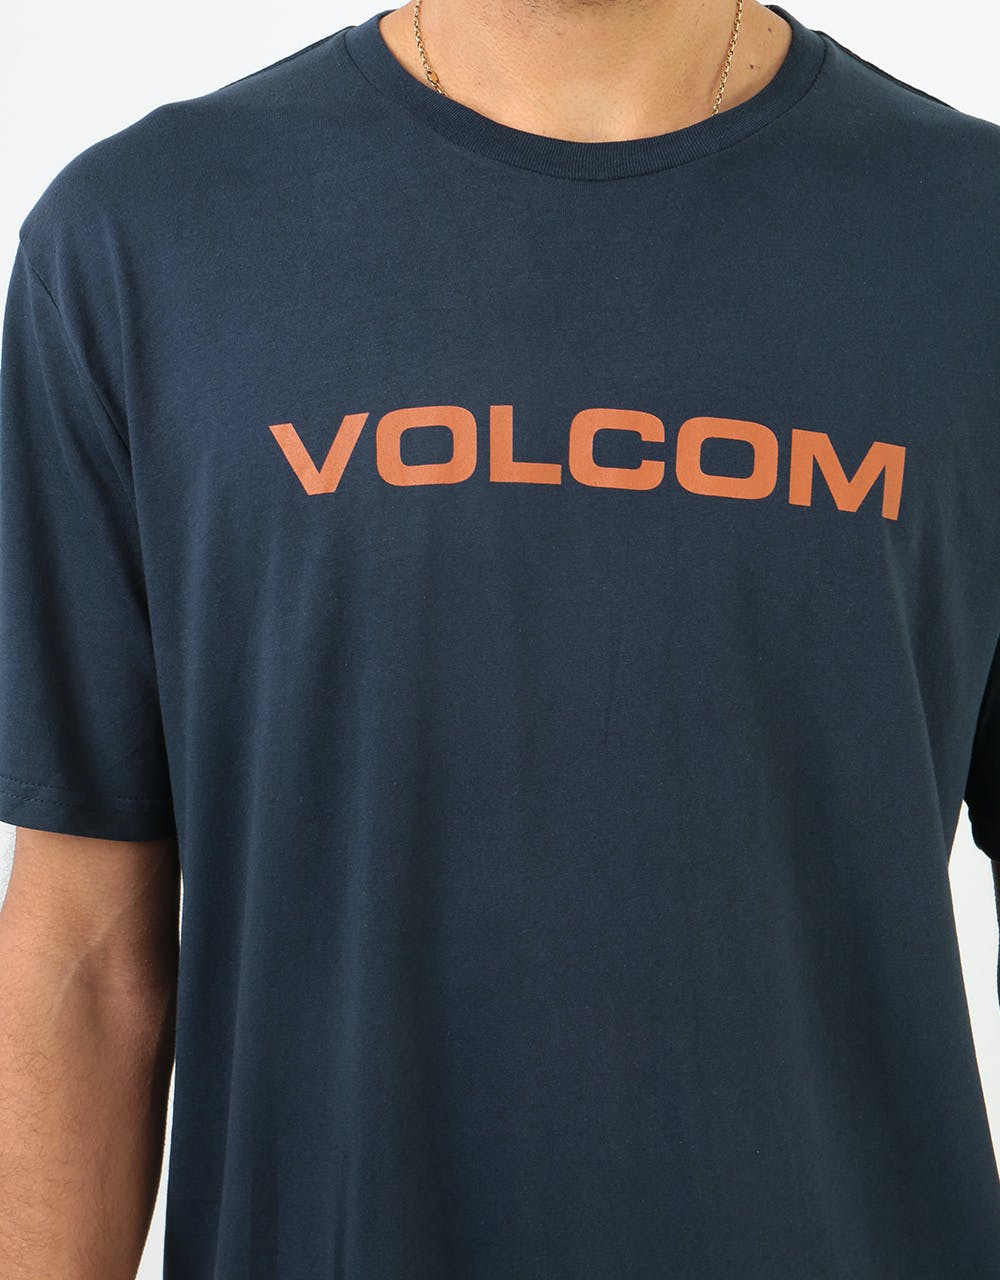 Volcom Crisp Euro Basic T-Shirt - Navy